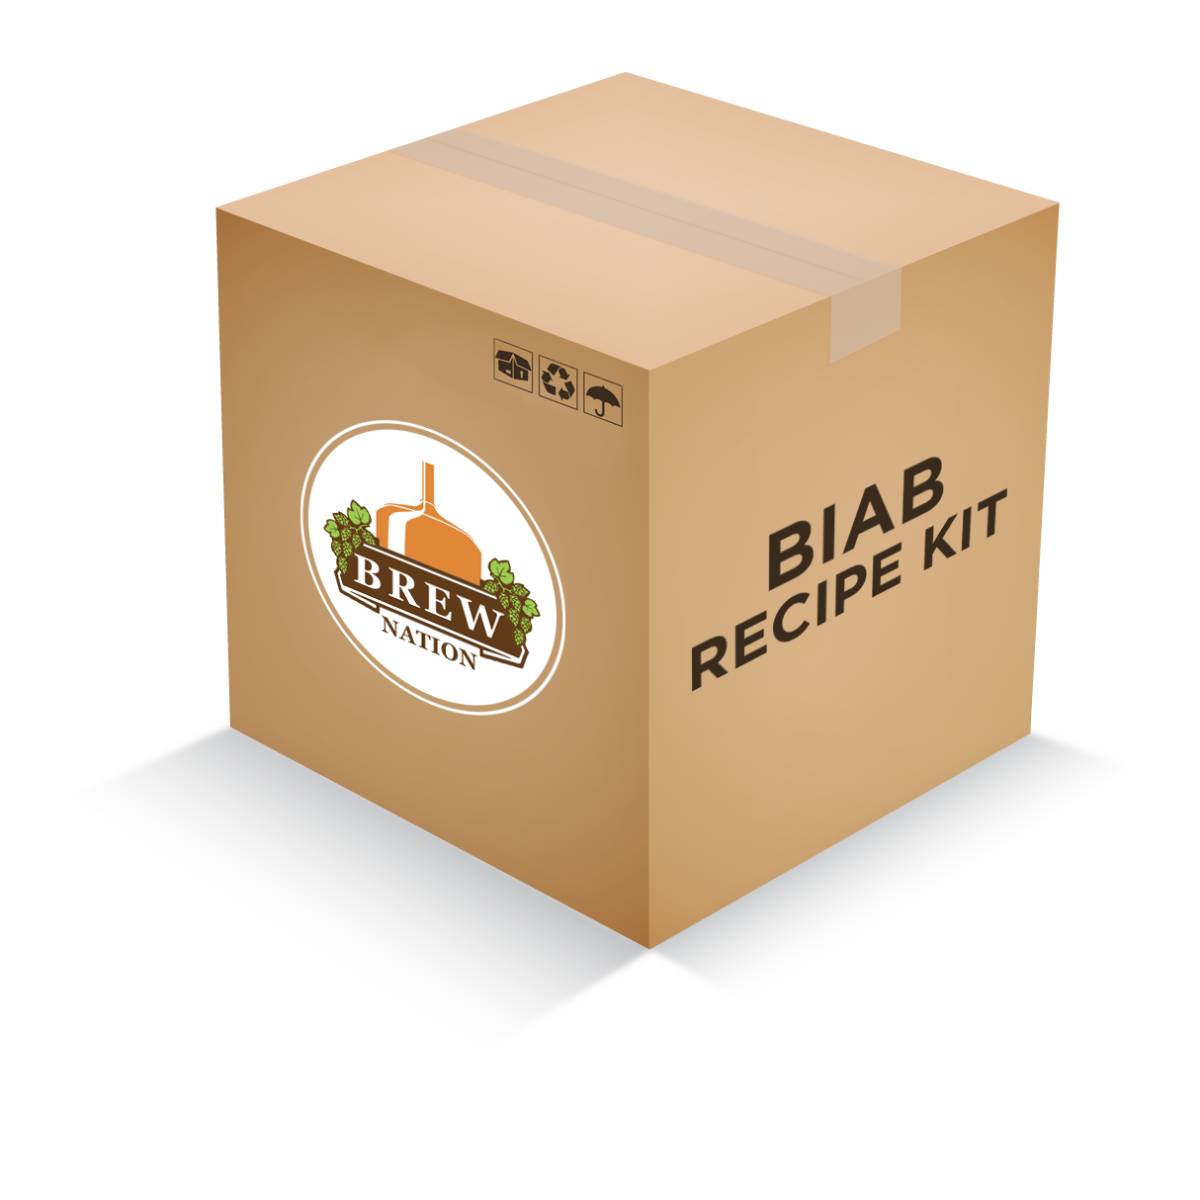 India Pale Ale (American IPA) Recipe Kit (BIAB)